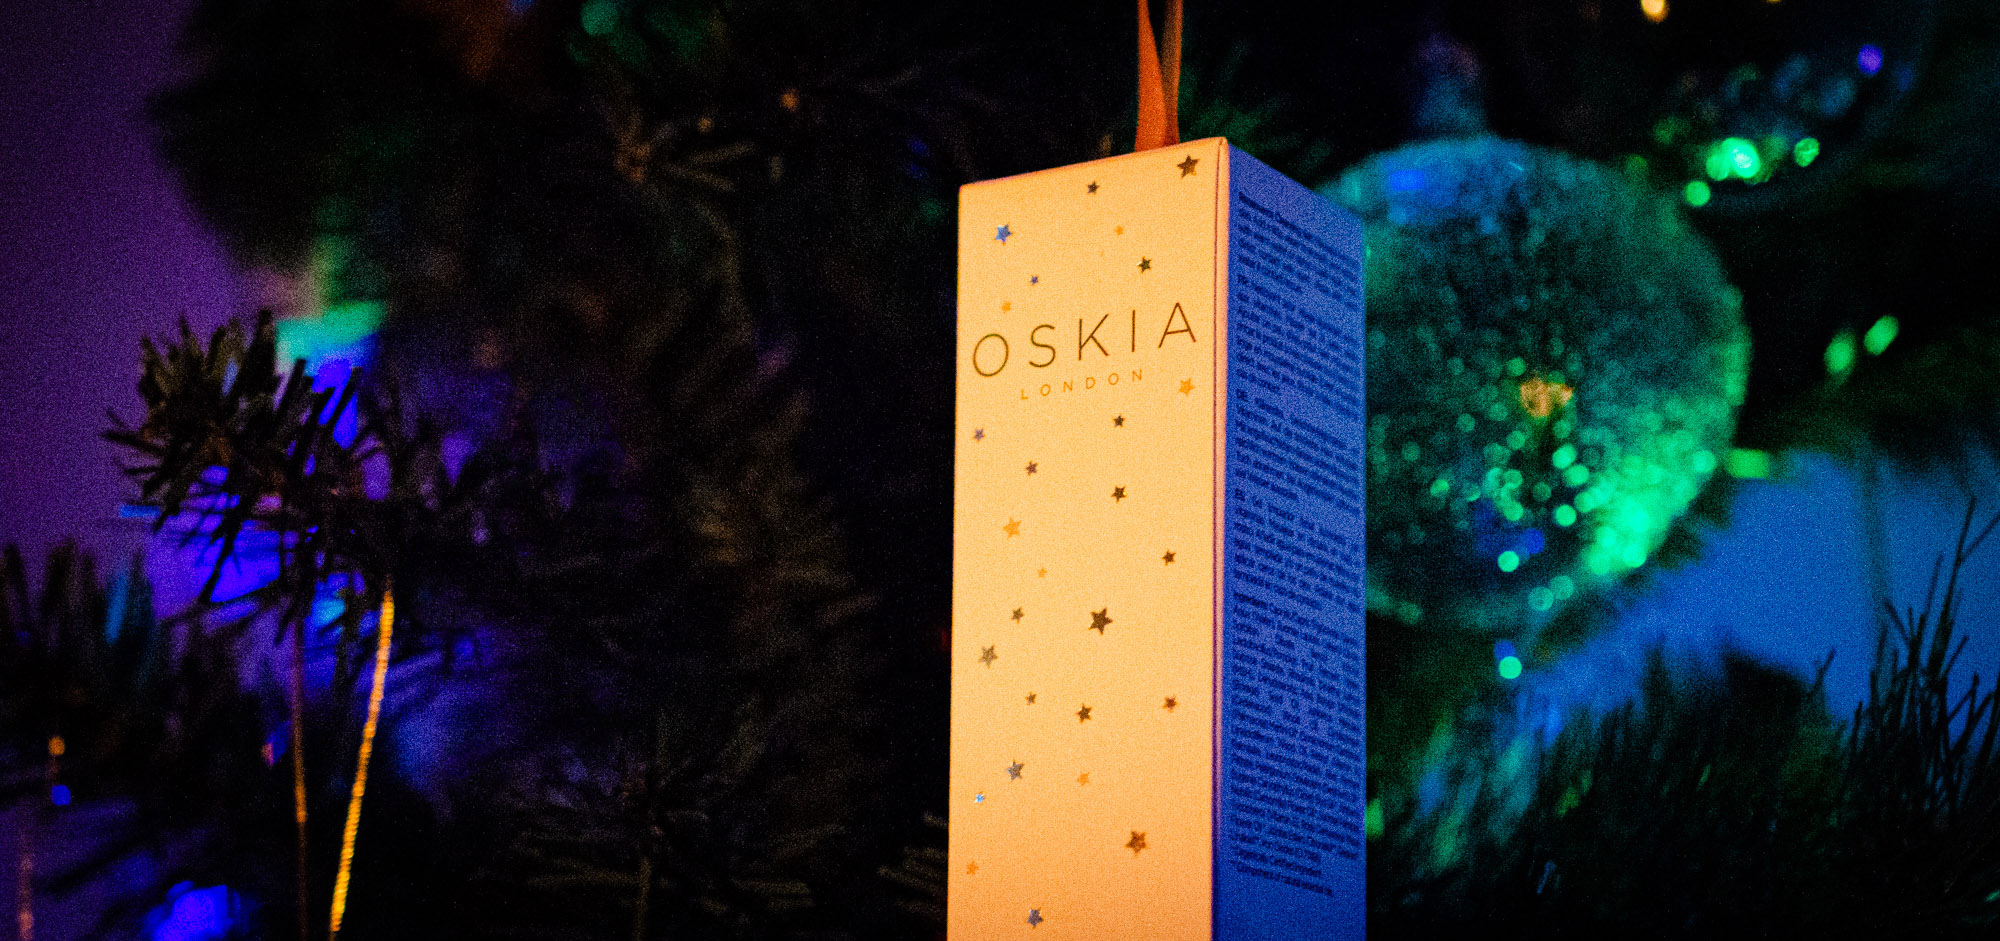 Clean beauty Christmas gifts - Oskia on the Christmas tree